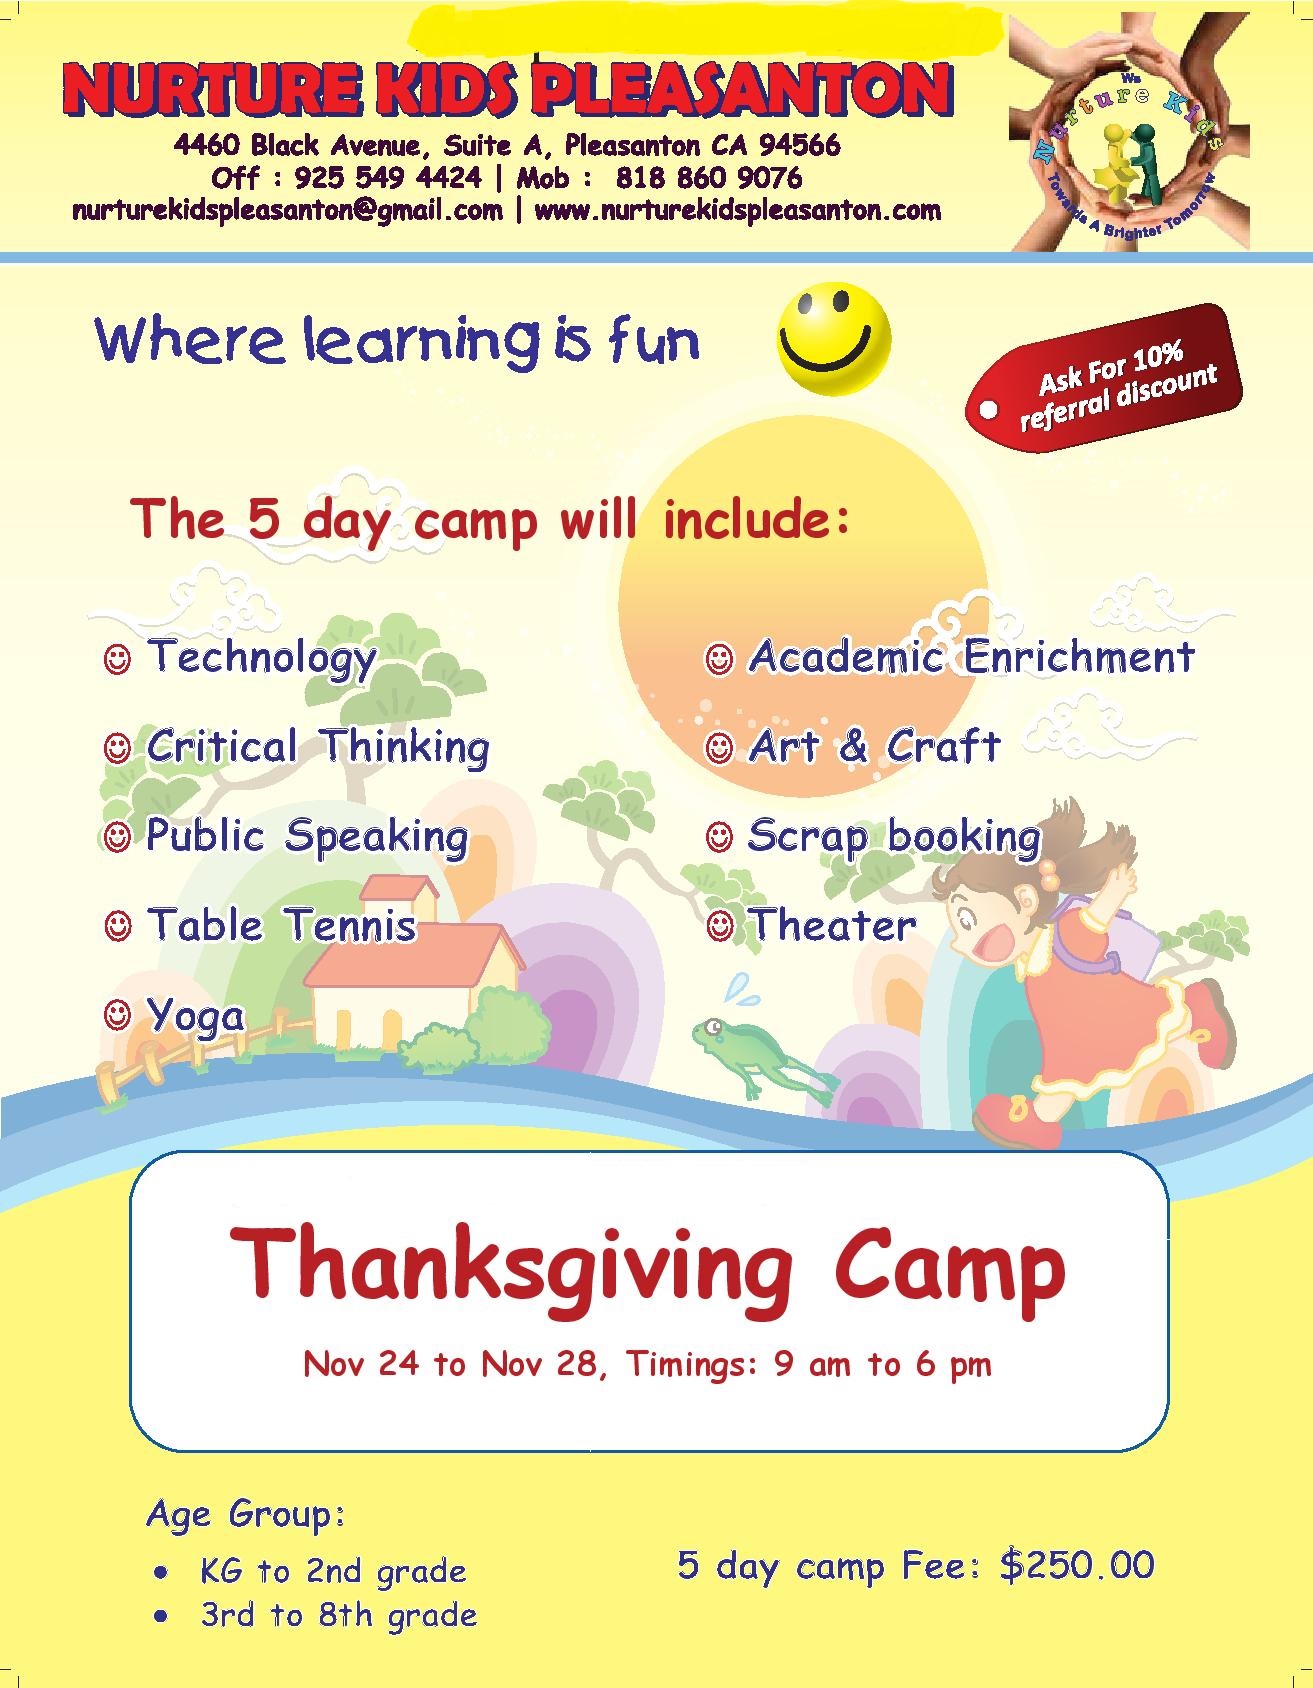 Thanksgiving Camp at Nurture Kids Pleasanton!! Connecting people in